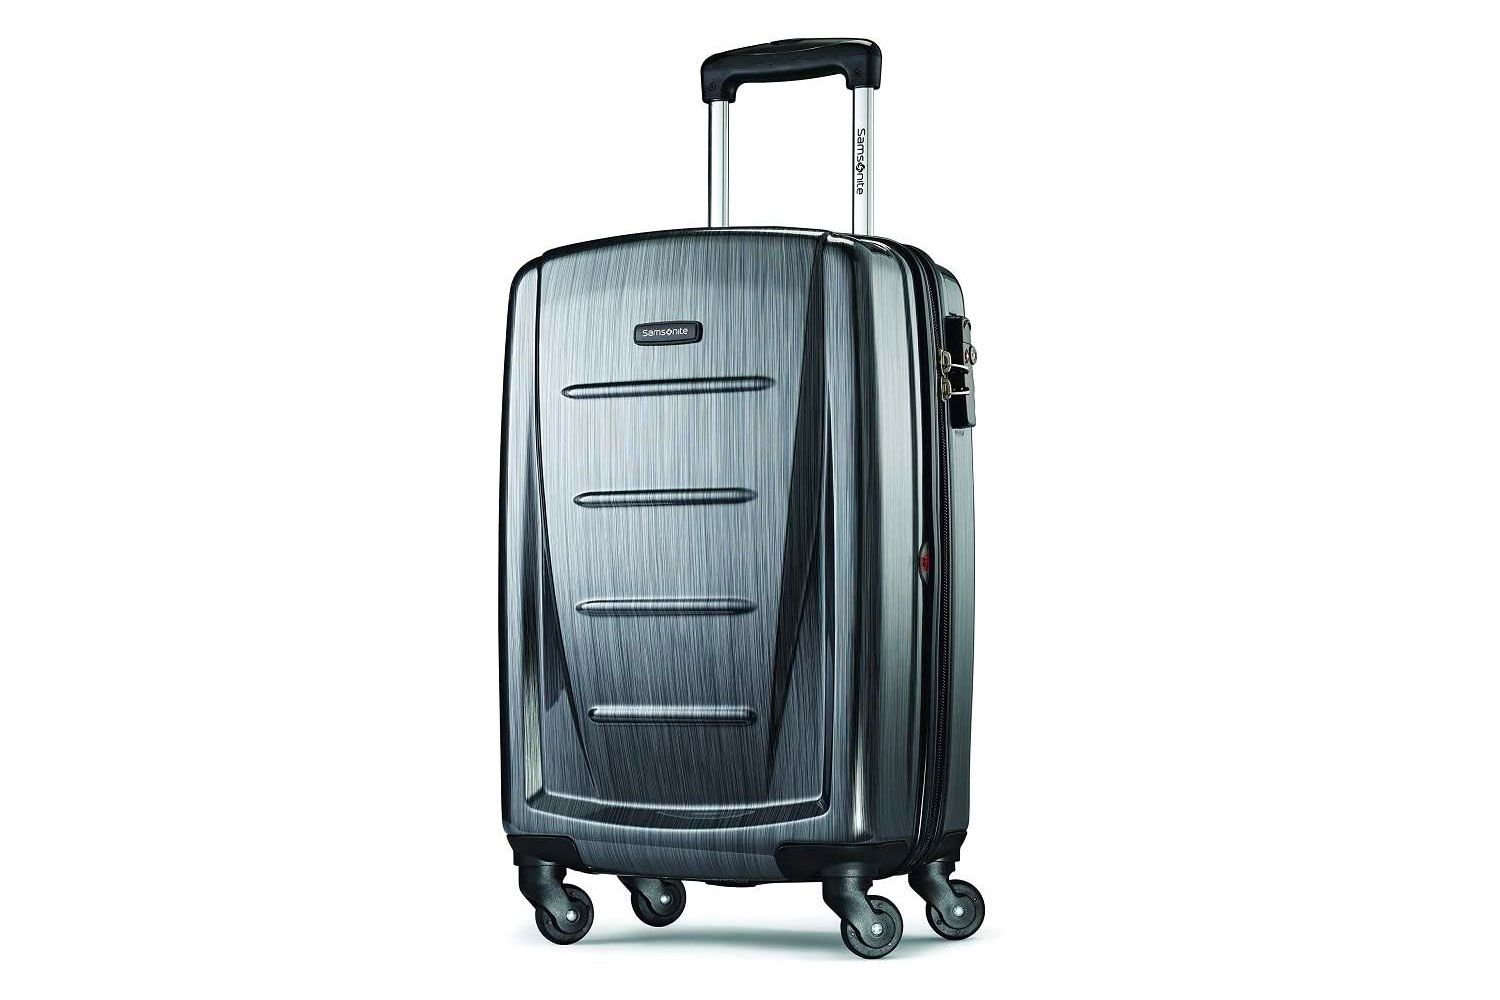 Samsonite Winfield 2 Hardside Luggage With Spinner Wheels